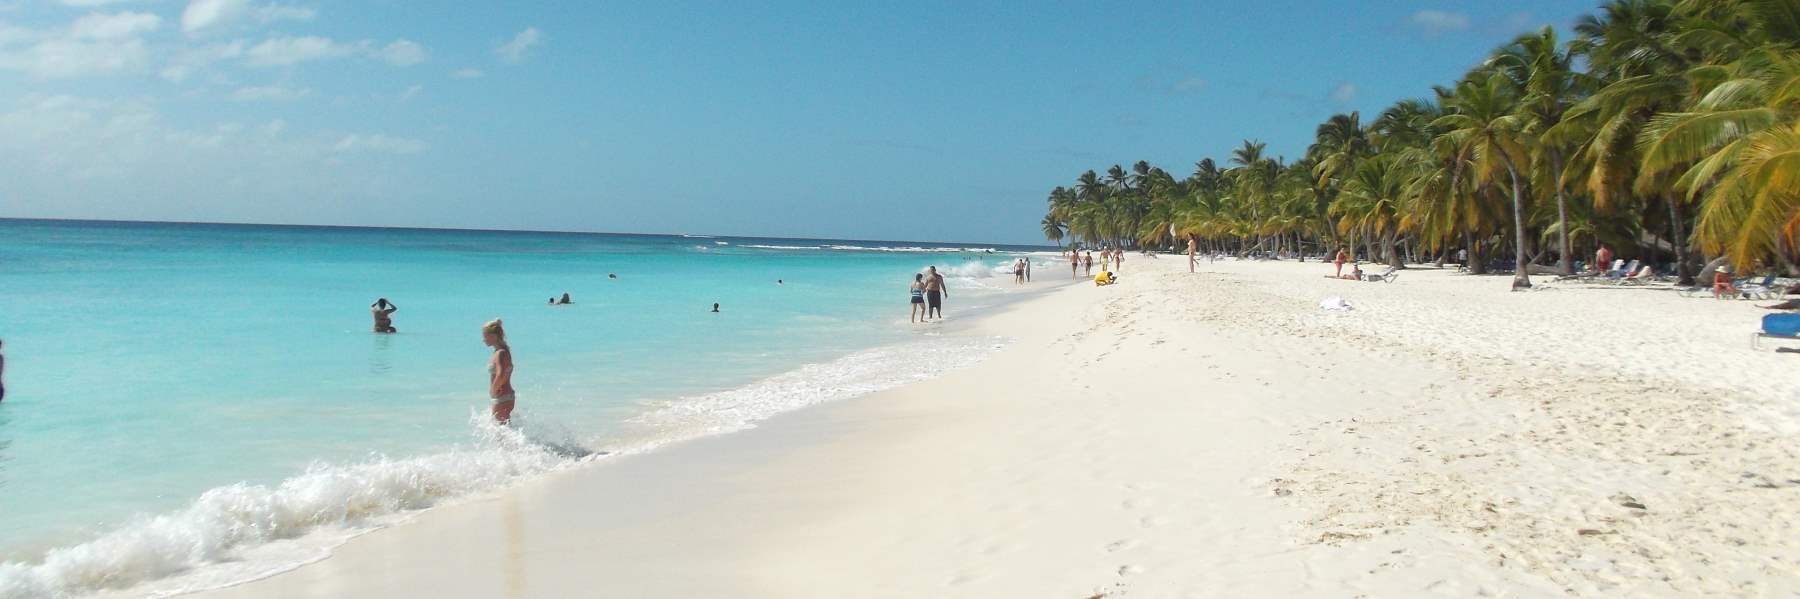 Oferta a Punta Cana con Vuelo desde Madrid (Punta Cana - República Dominicana)